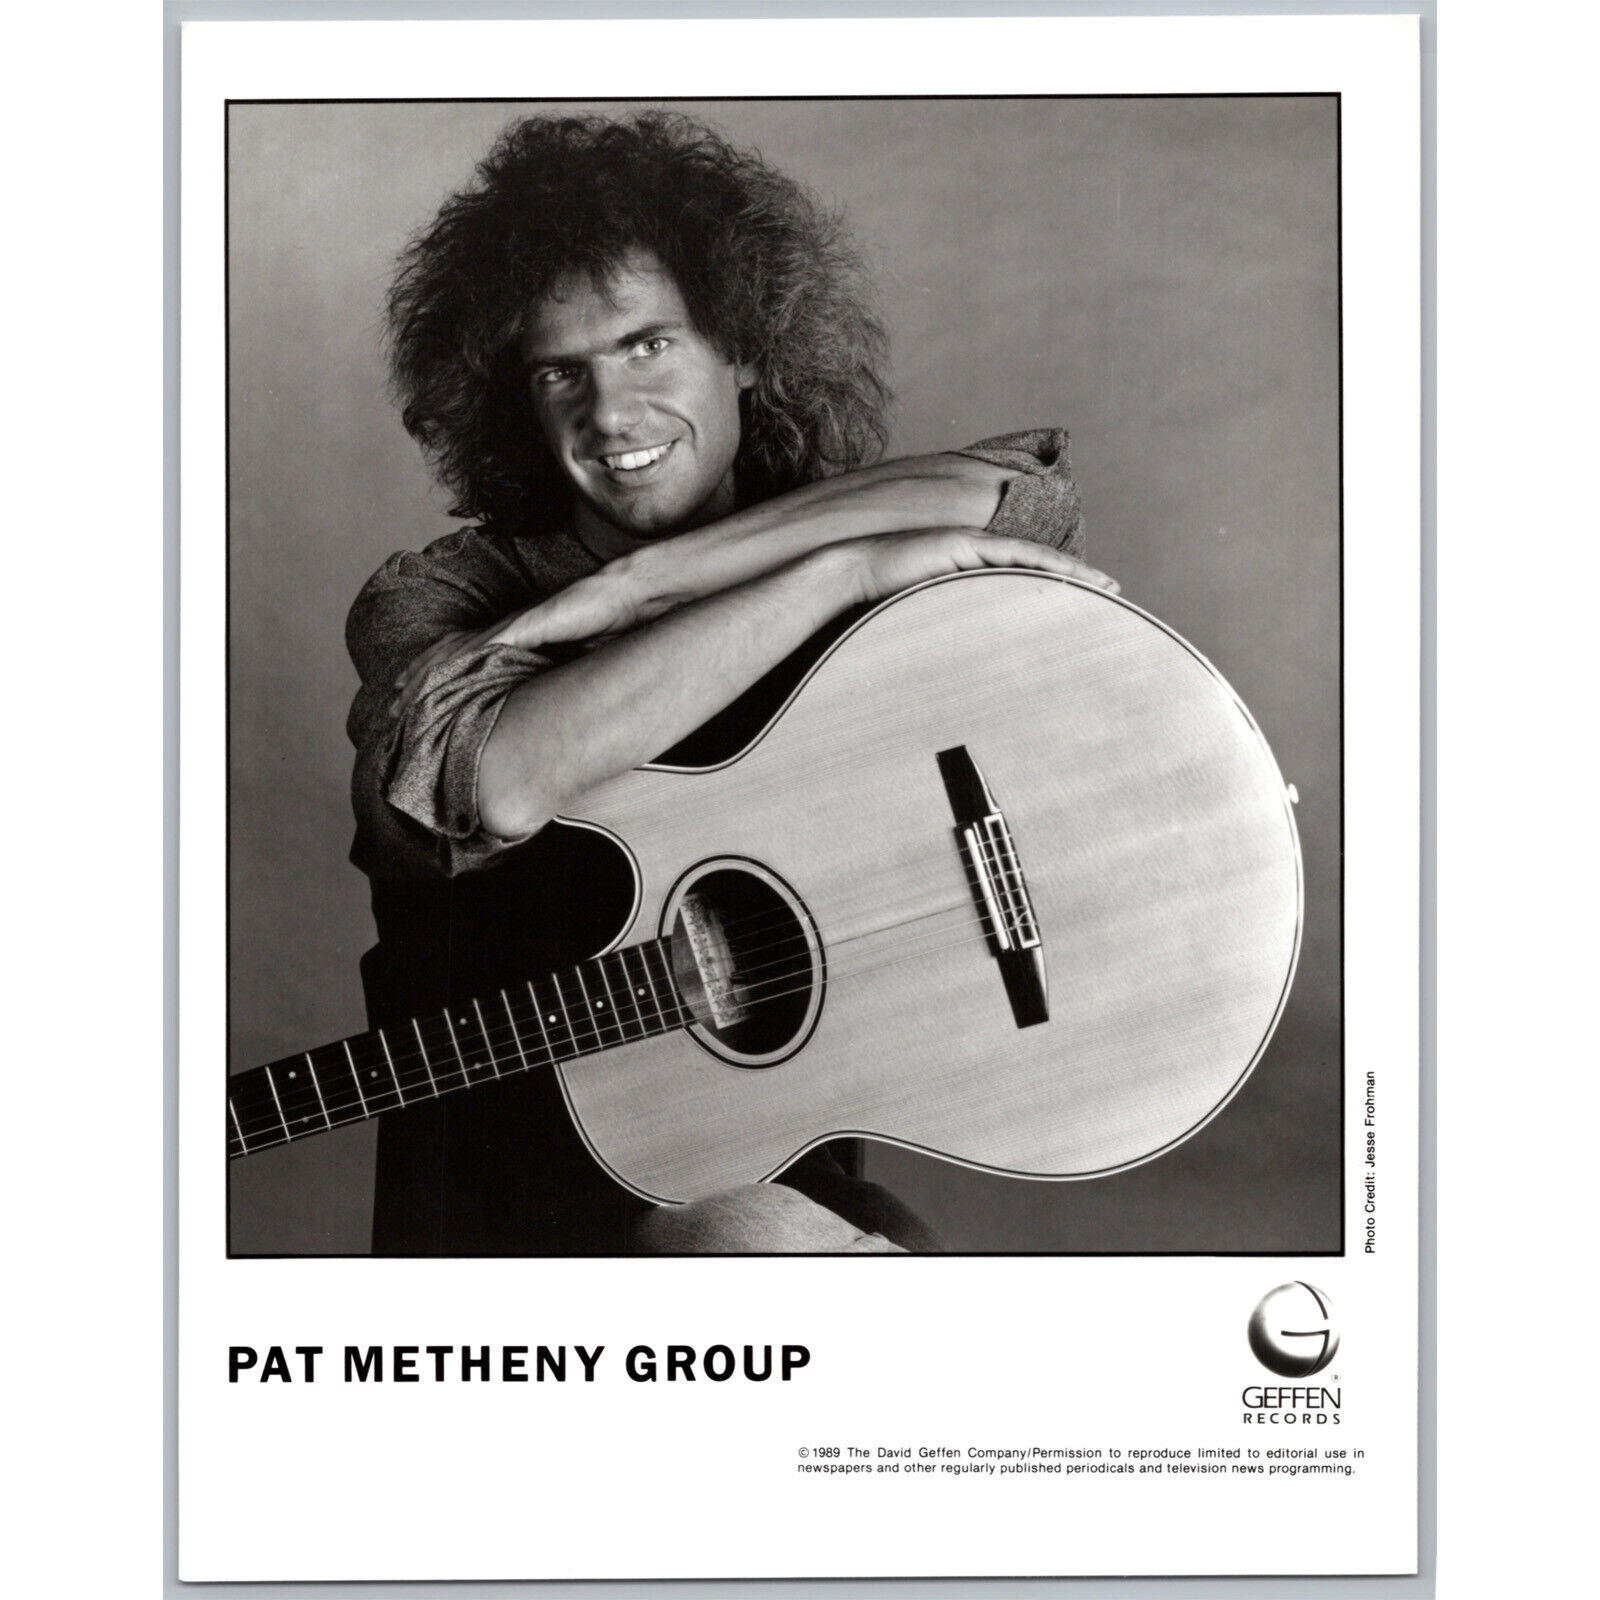 Pat Metheny Group Contemporary Jazz World Guitarist 80s-90s Music Press Photo